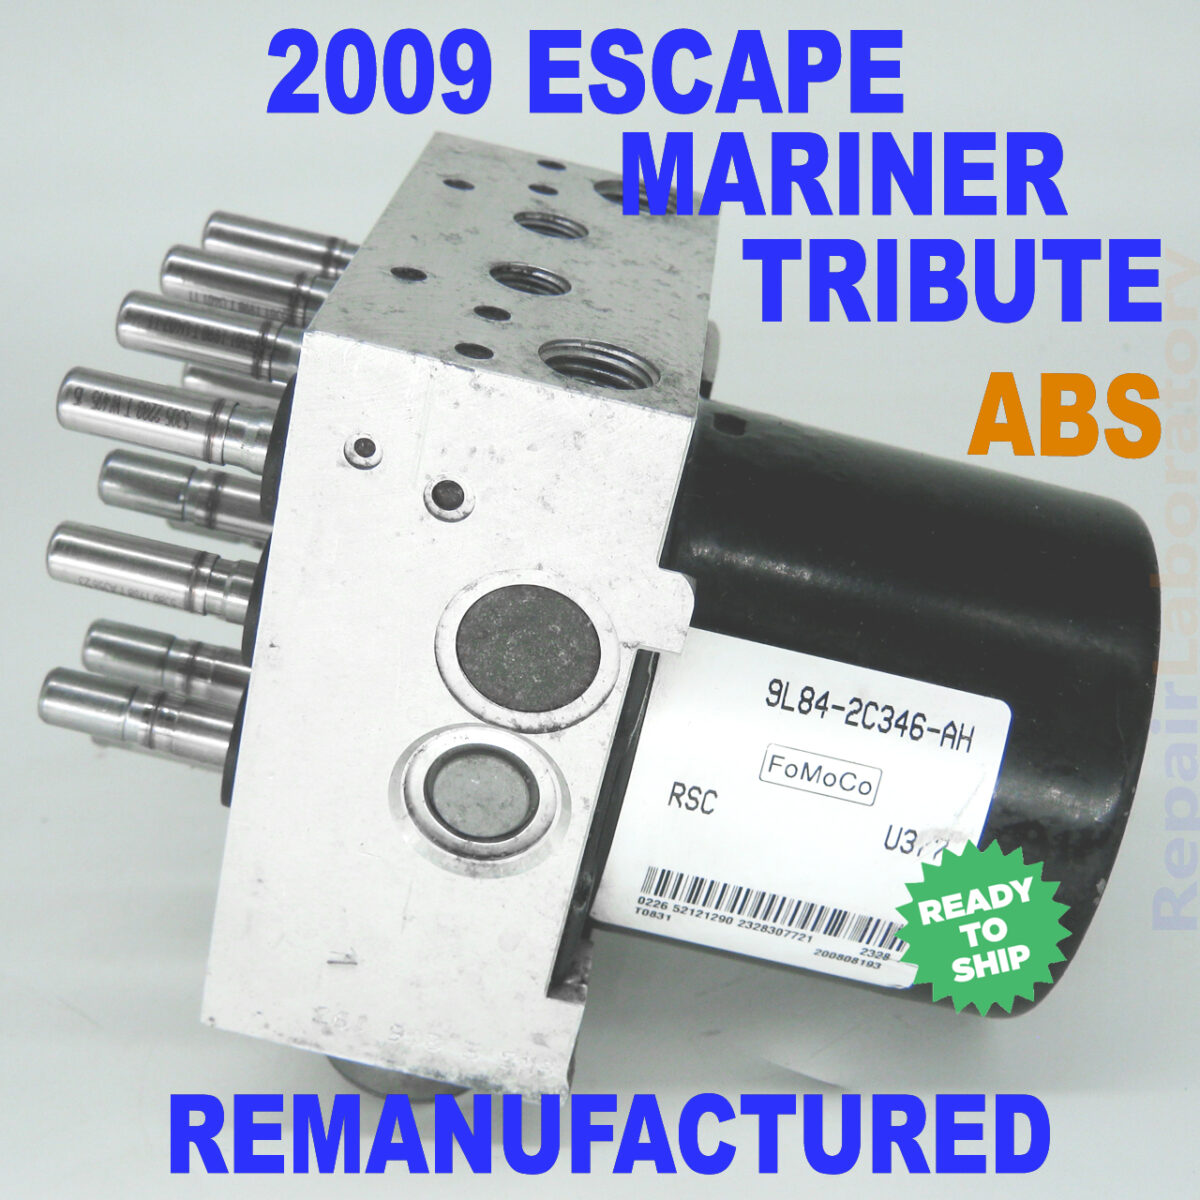 2009_escape_mariner_tribute_hydraulic_unit_9L84-2C346-AH